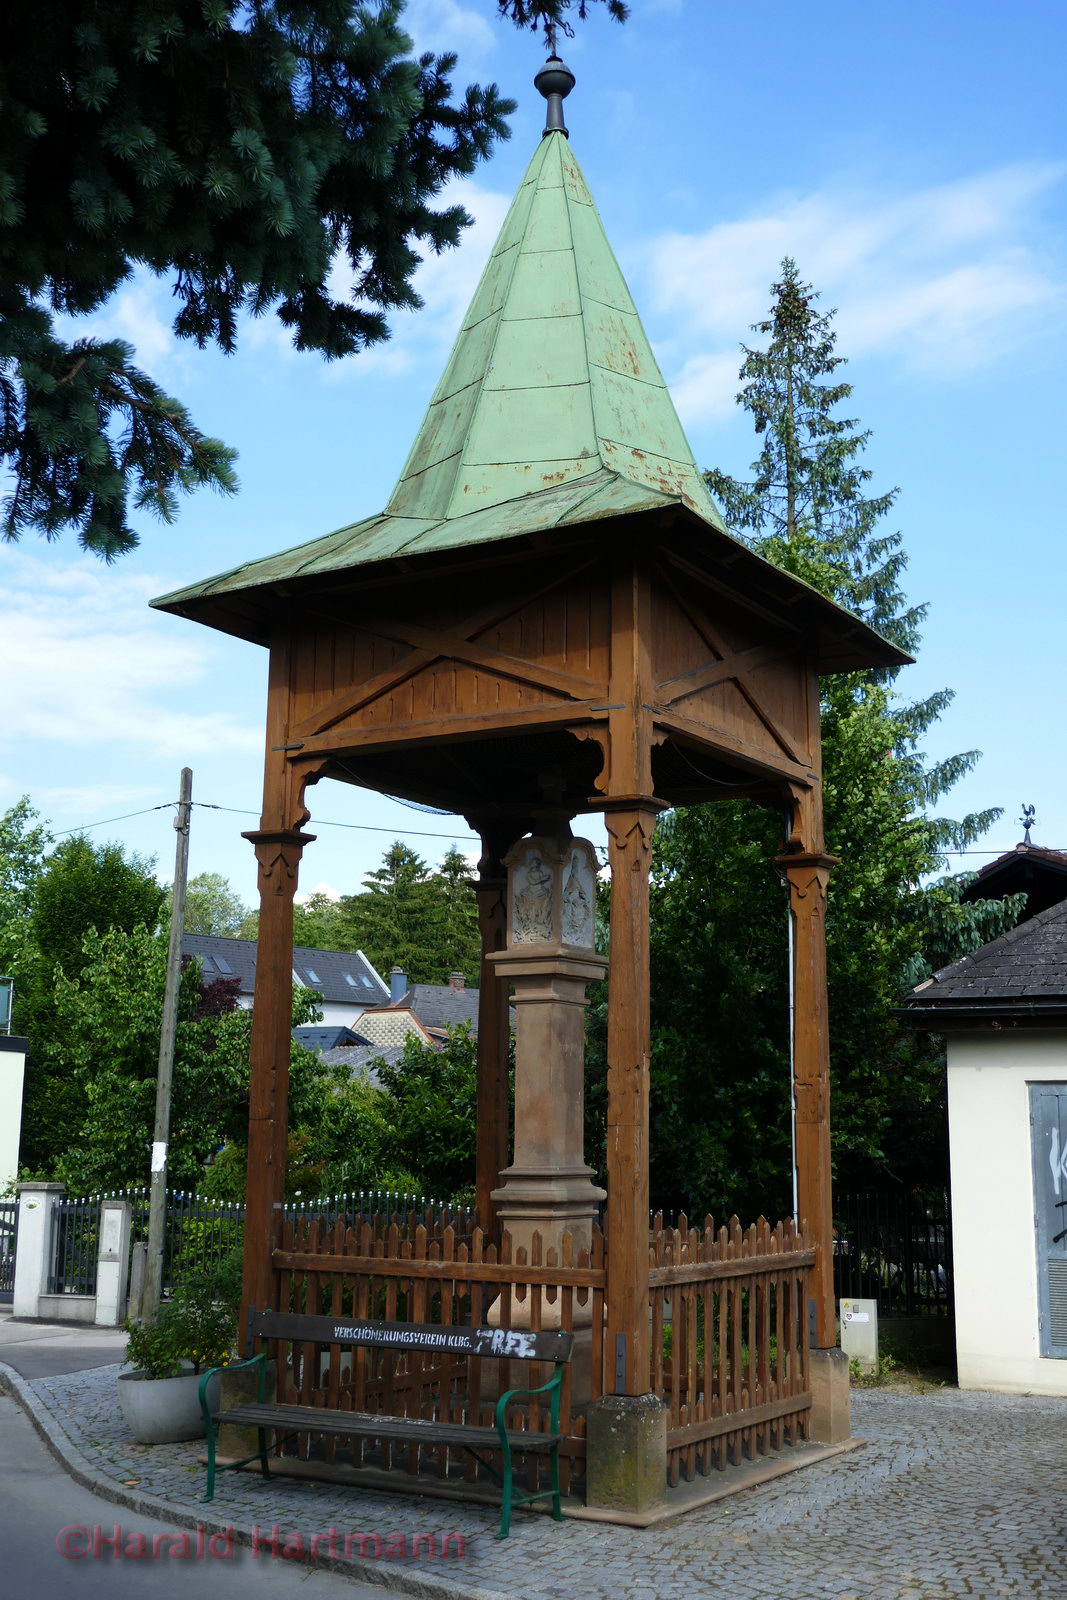 Glockenmarterl